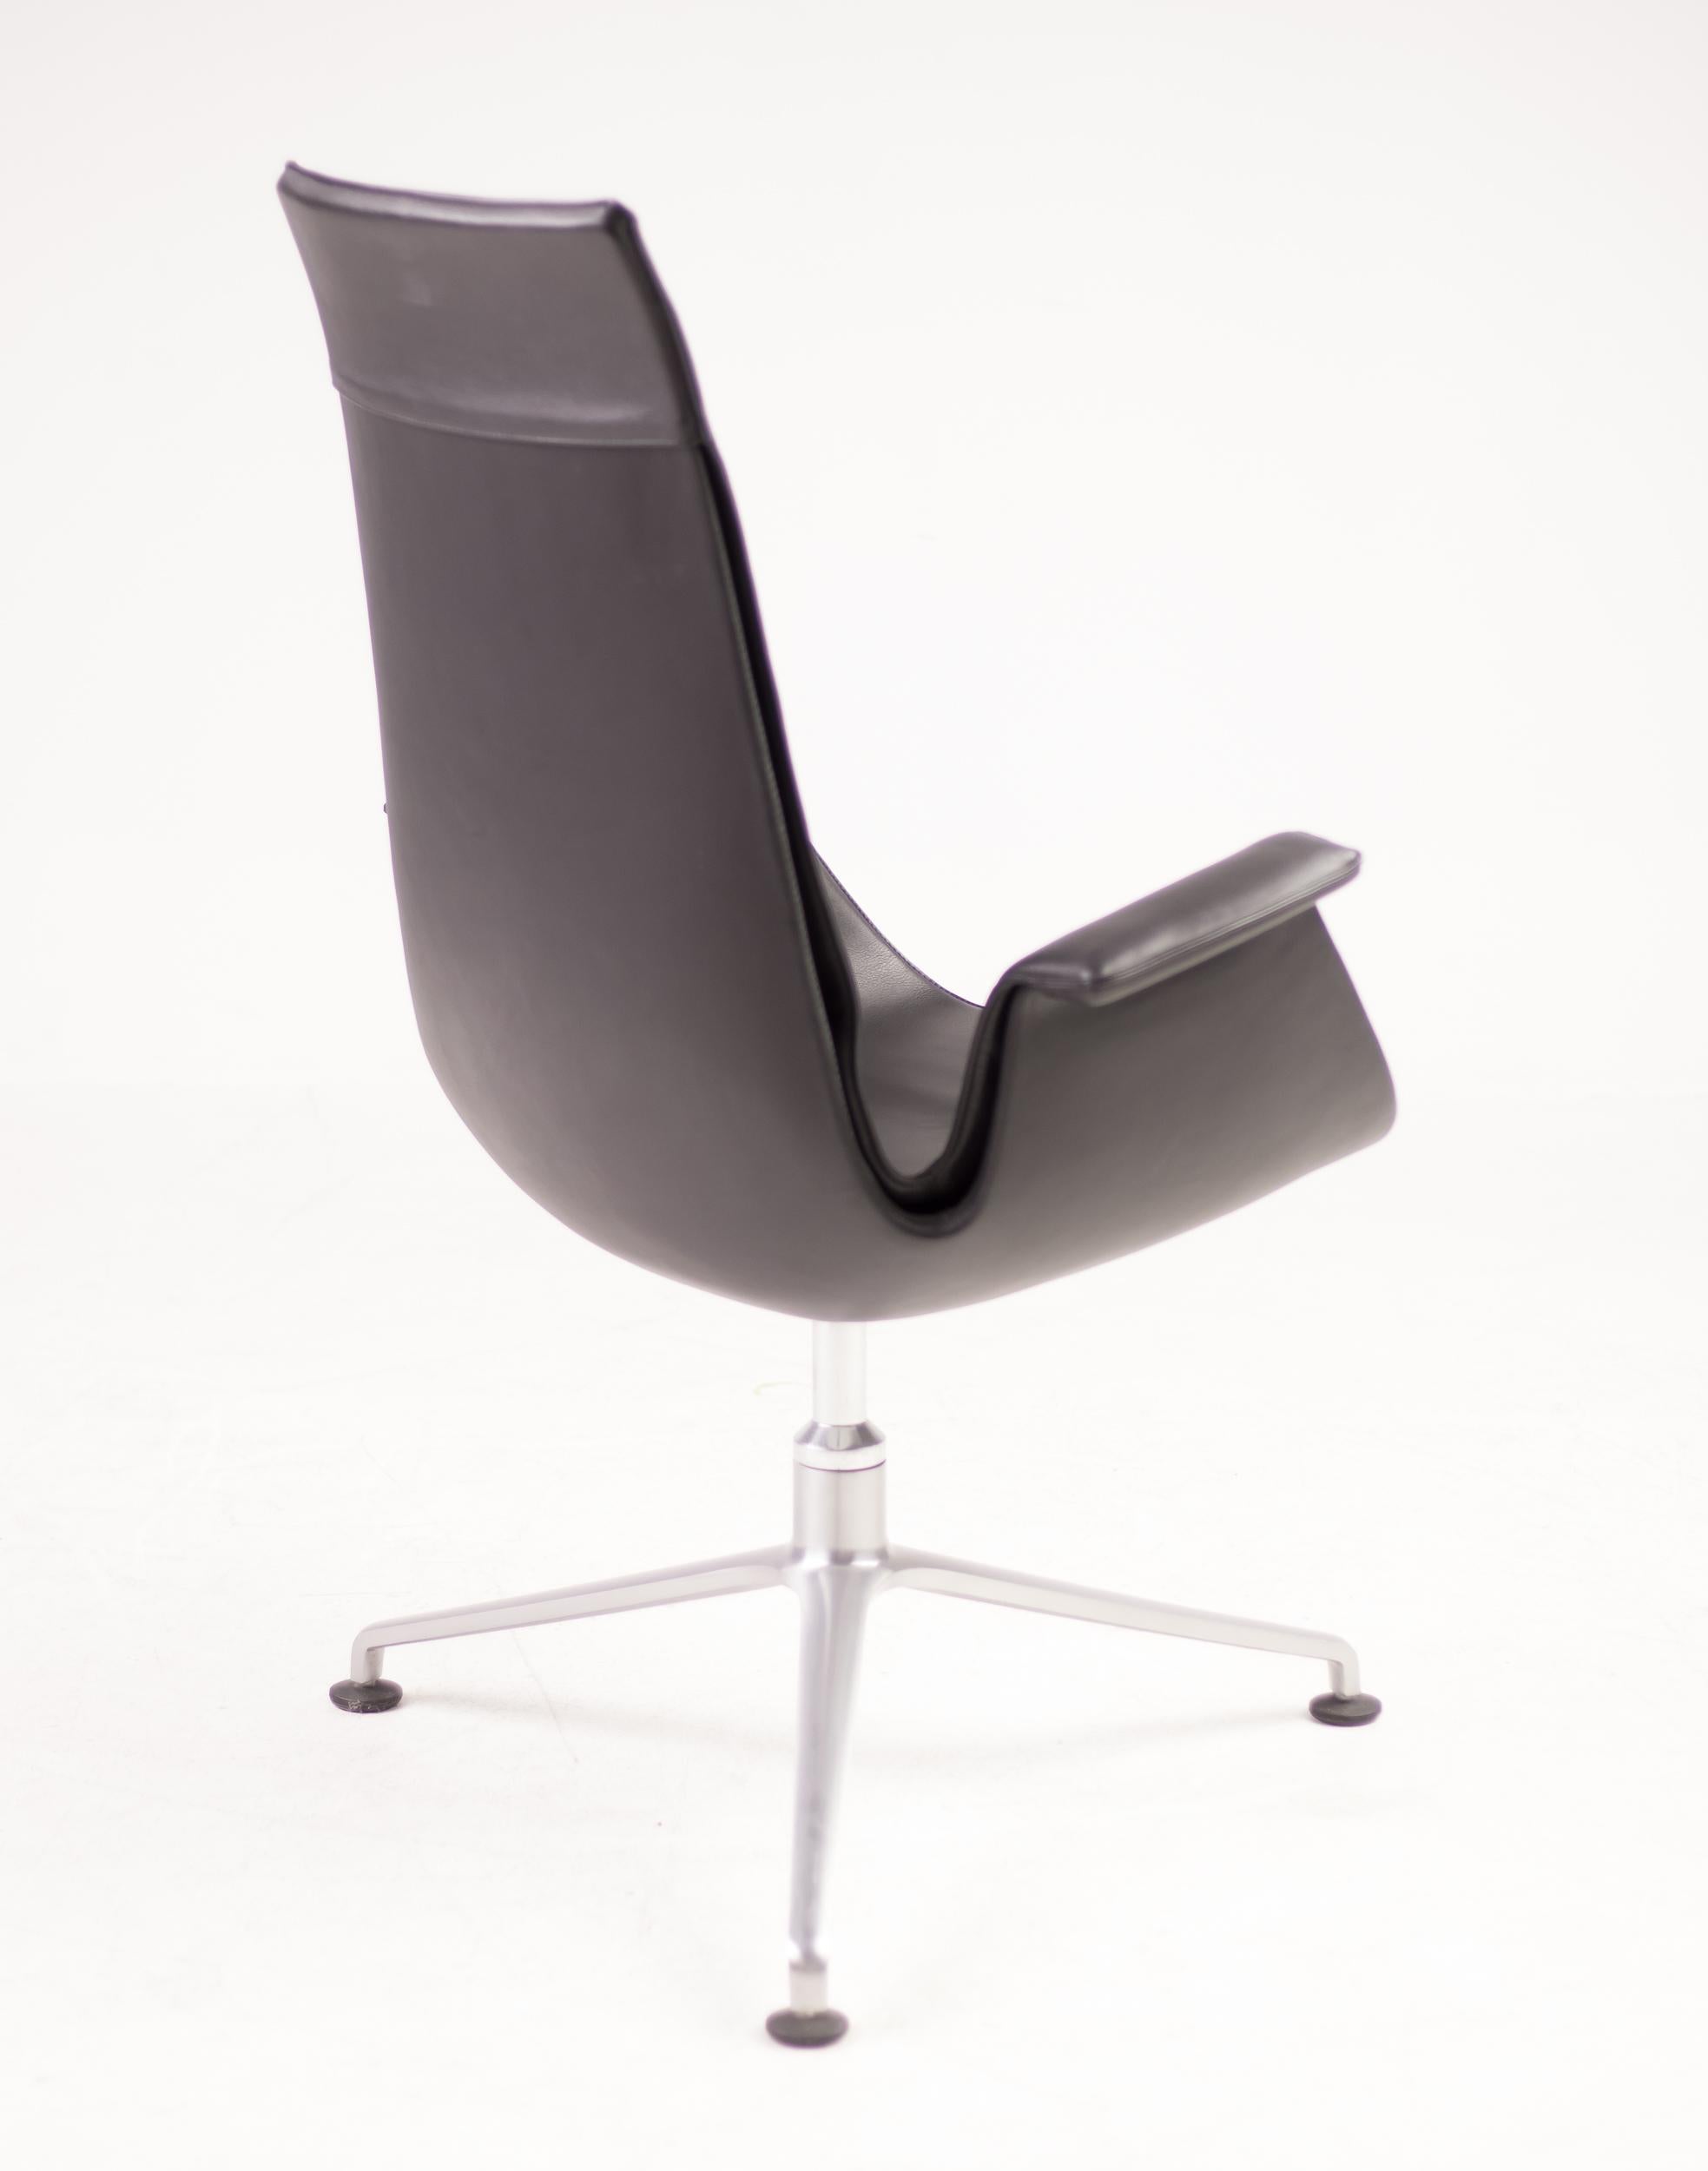 Black leather Bird chair designed by Preben Fabricius & Jørgen Kastholm for Kill International. 
Beautiful swiveling high back desk chair on tripod cast aluminum base.